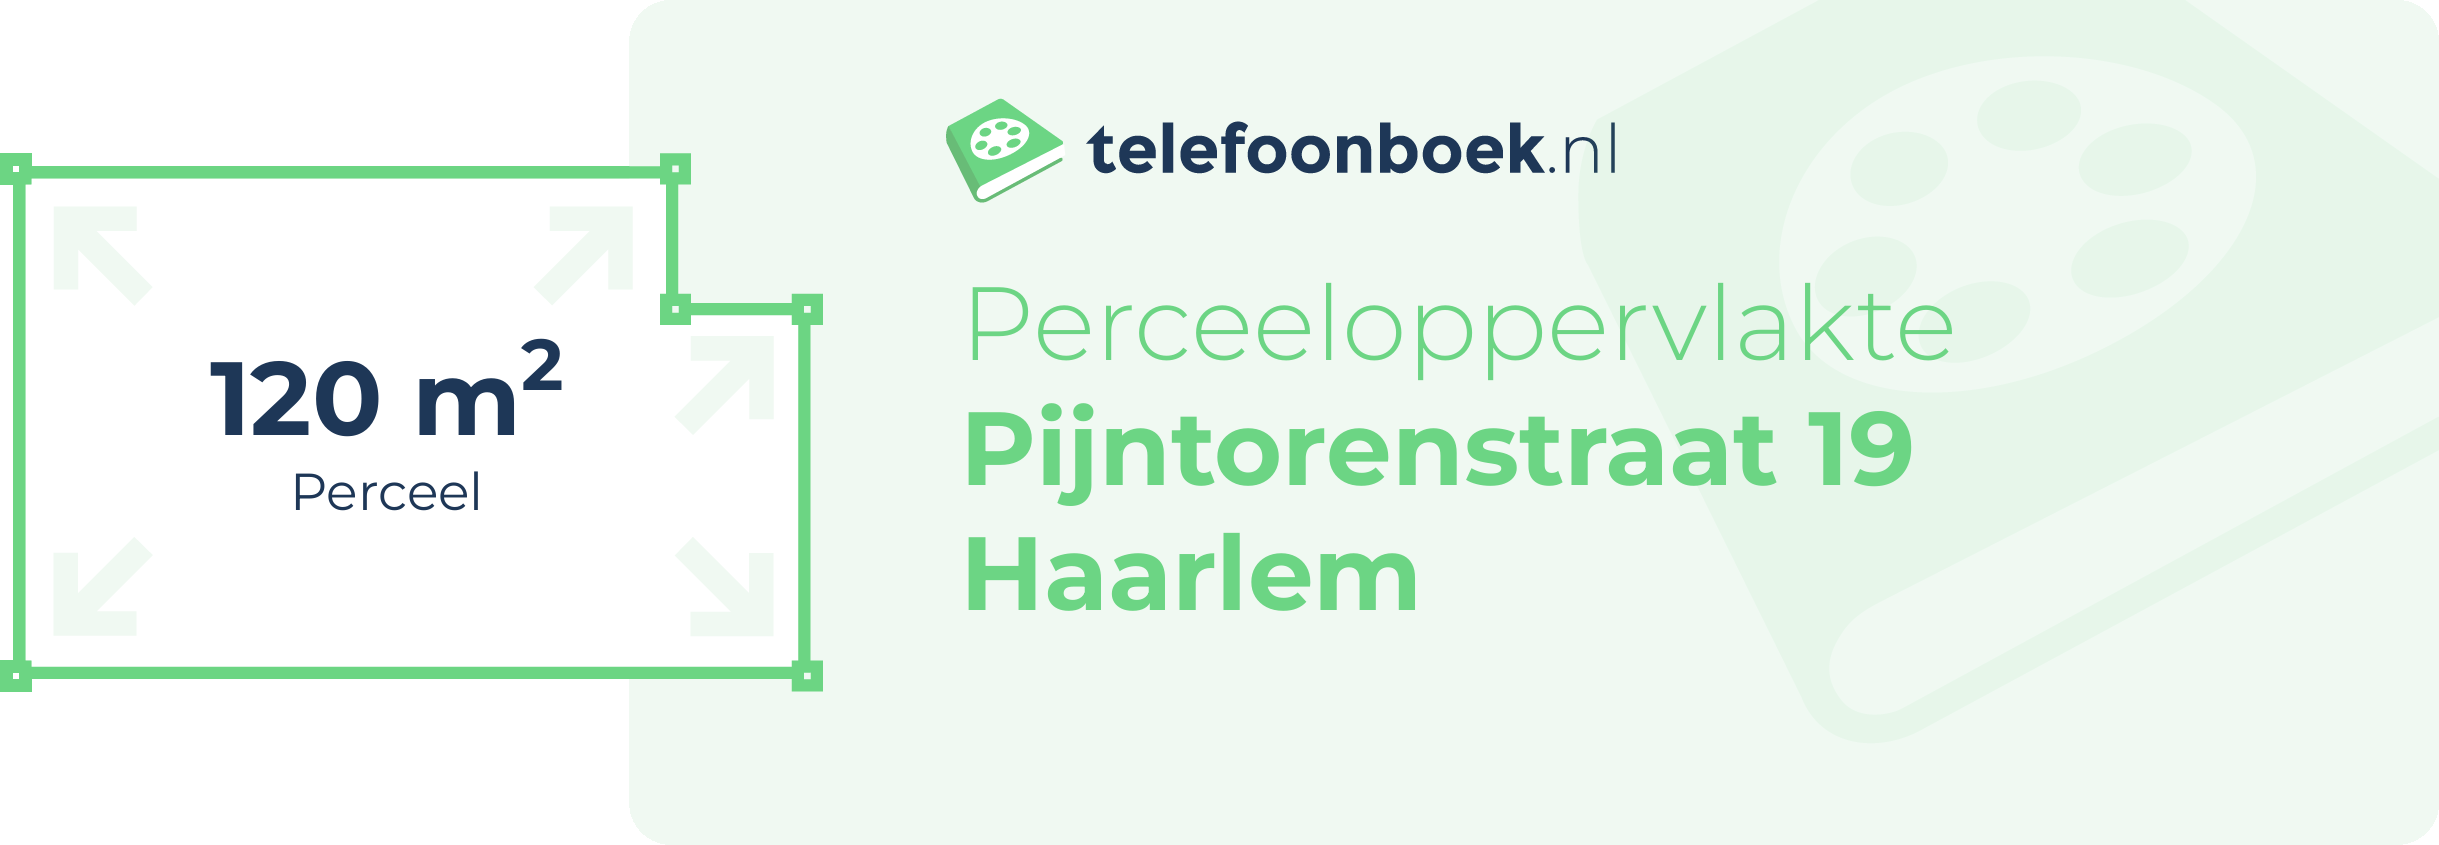 Perceeloppervlakte Pijntorenstraat 19 Haarlem